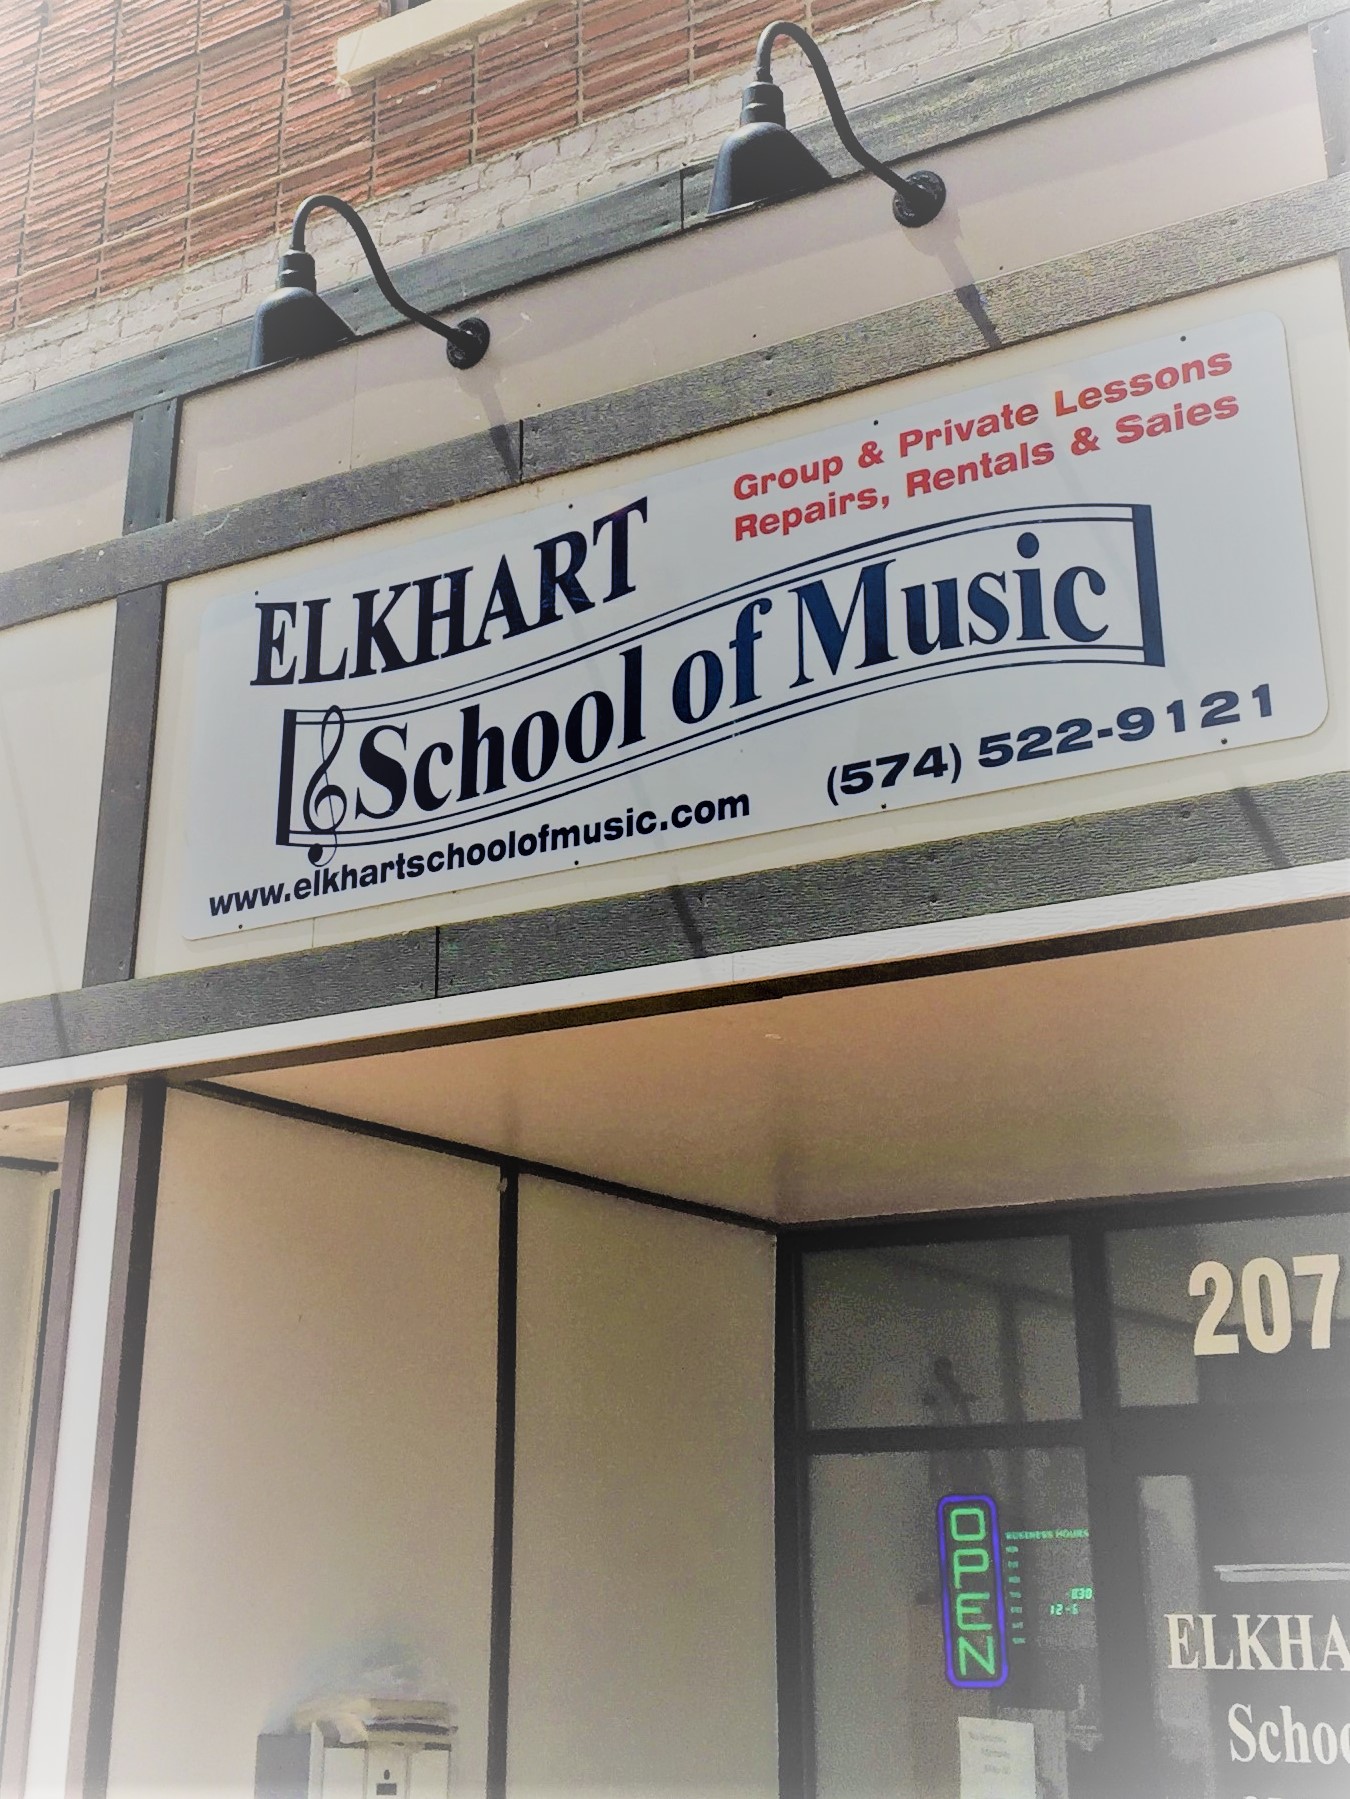 Elkhart School of Music